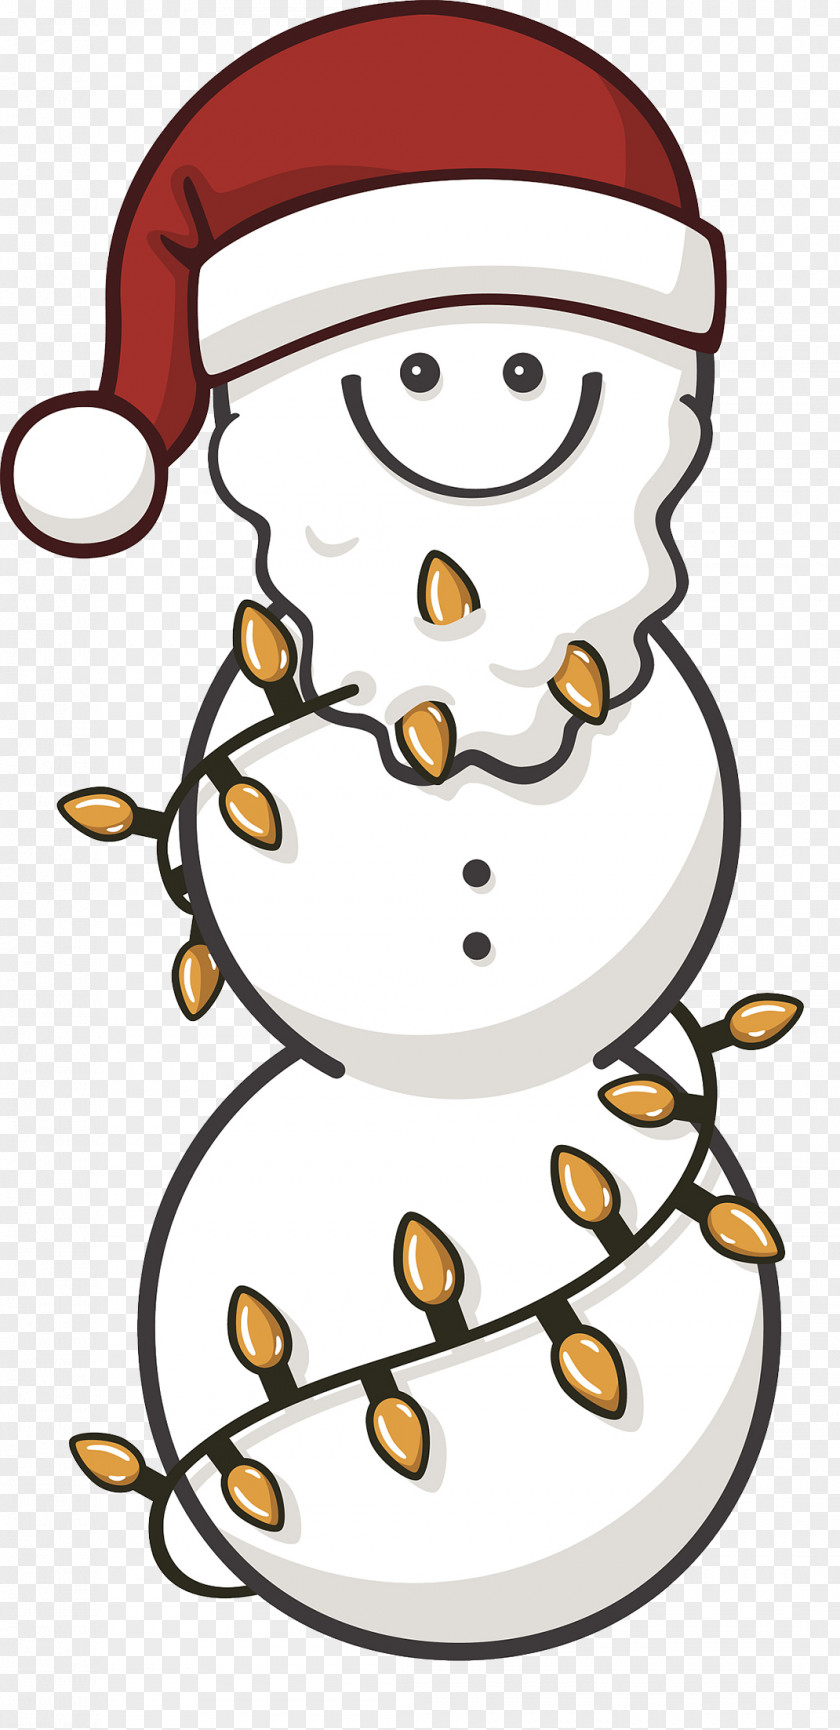 Christmas Snowman Illustration Cartoon PNG